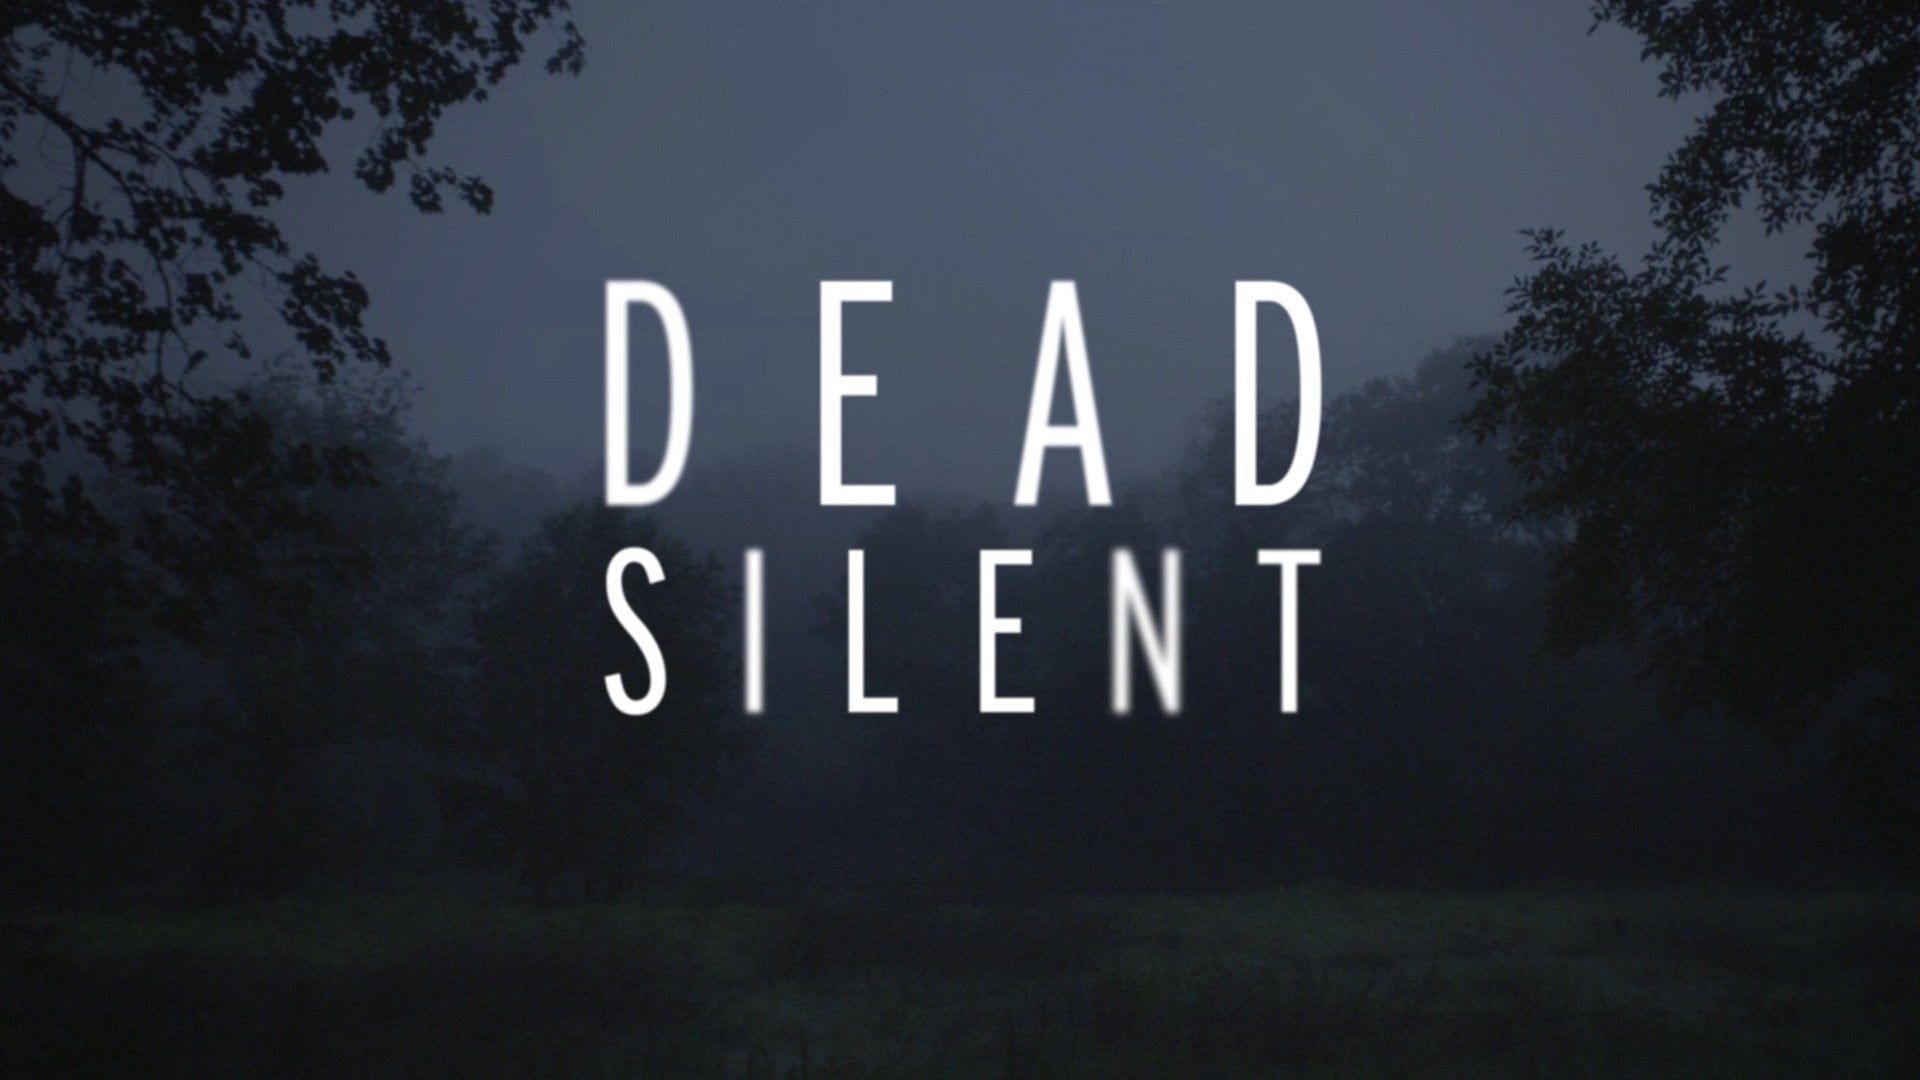 Dead Silent background